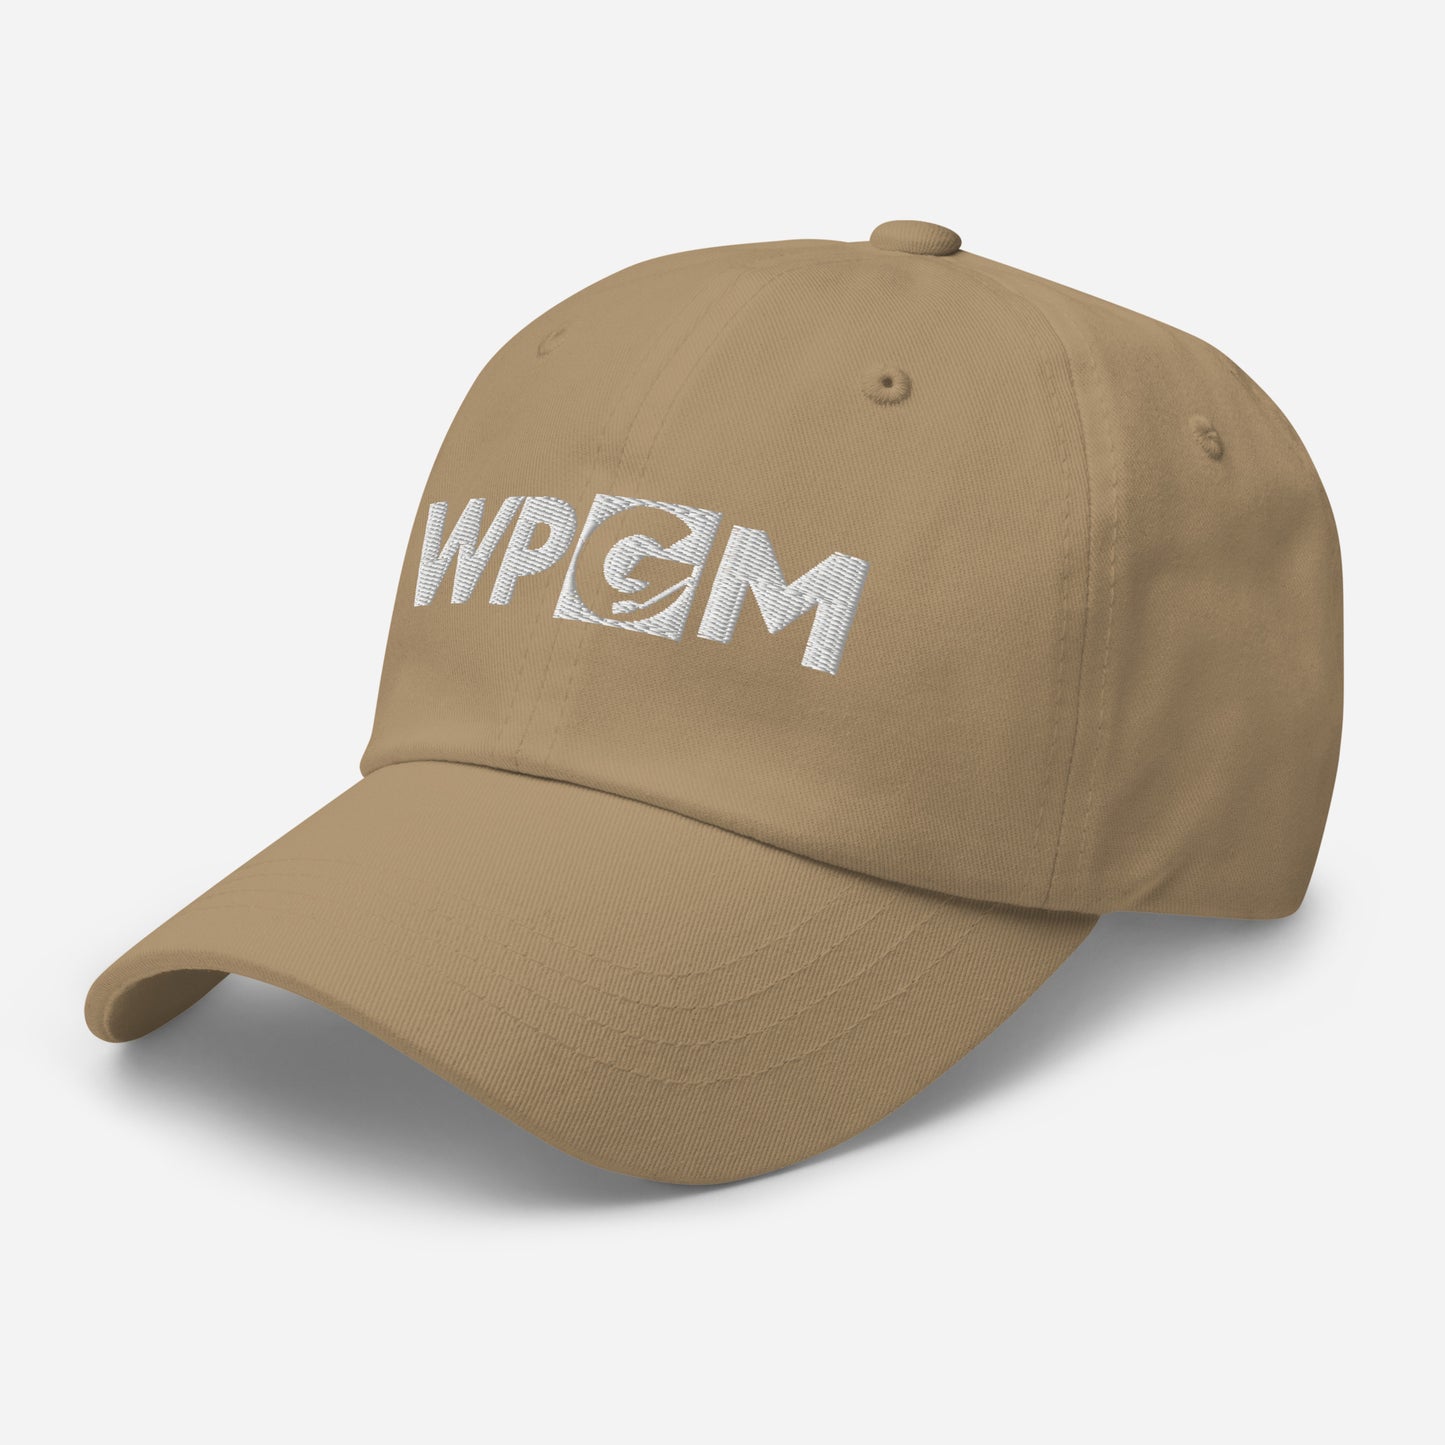 WPGM Classic (White Logo) Dad Hat